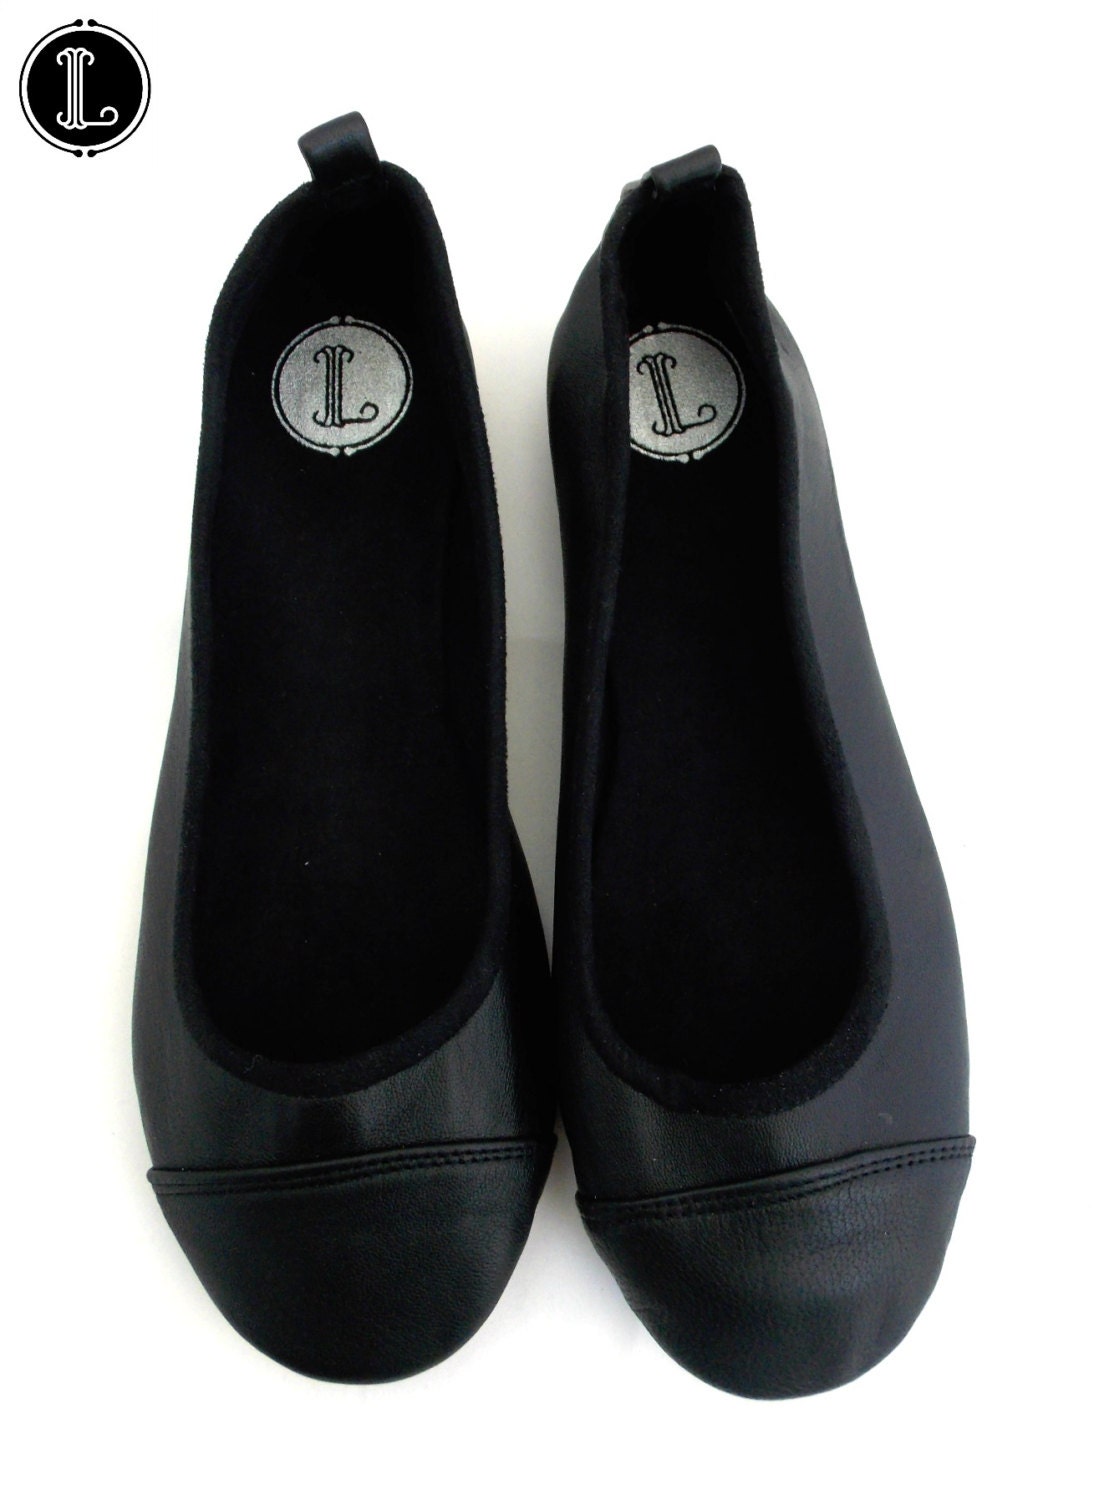 LUNAR. Black Leather Flats / Women Shoes / Leather Flat Shoes - Etsy